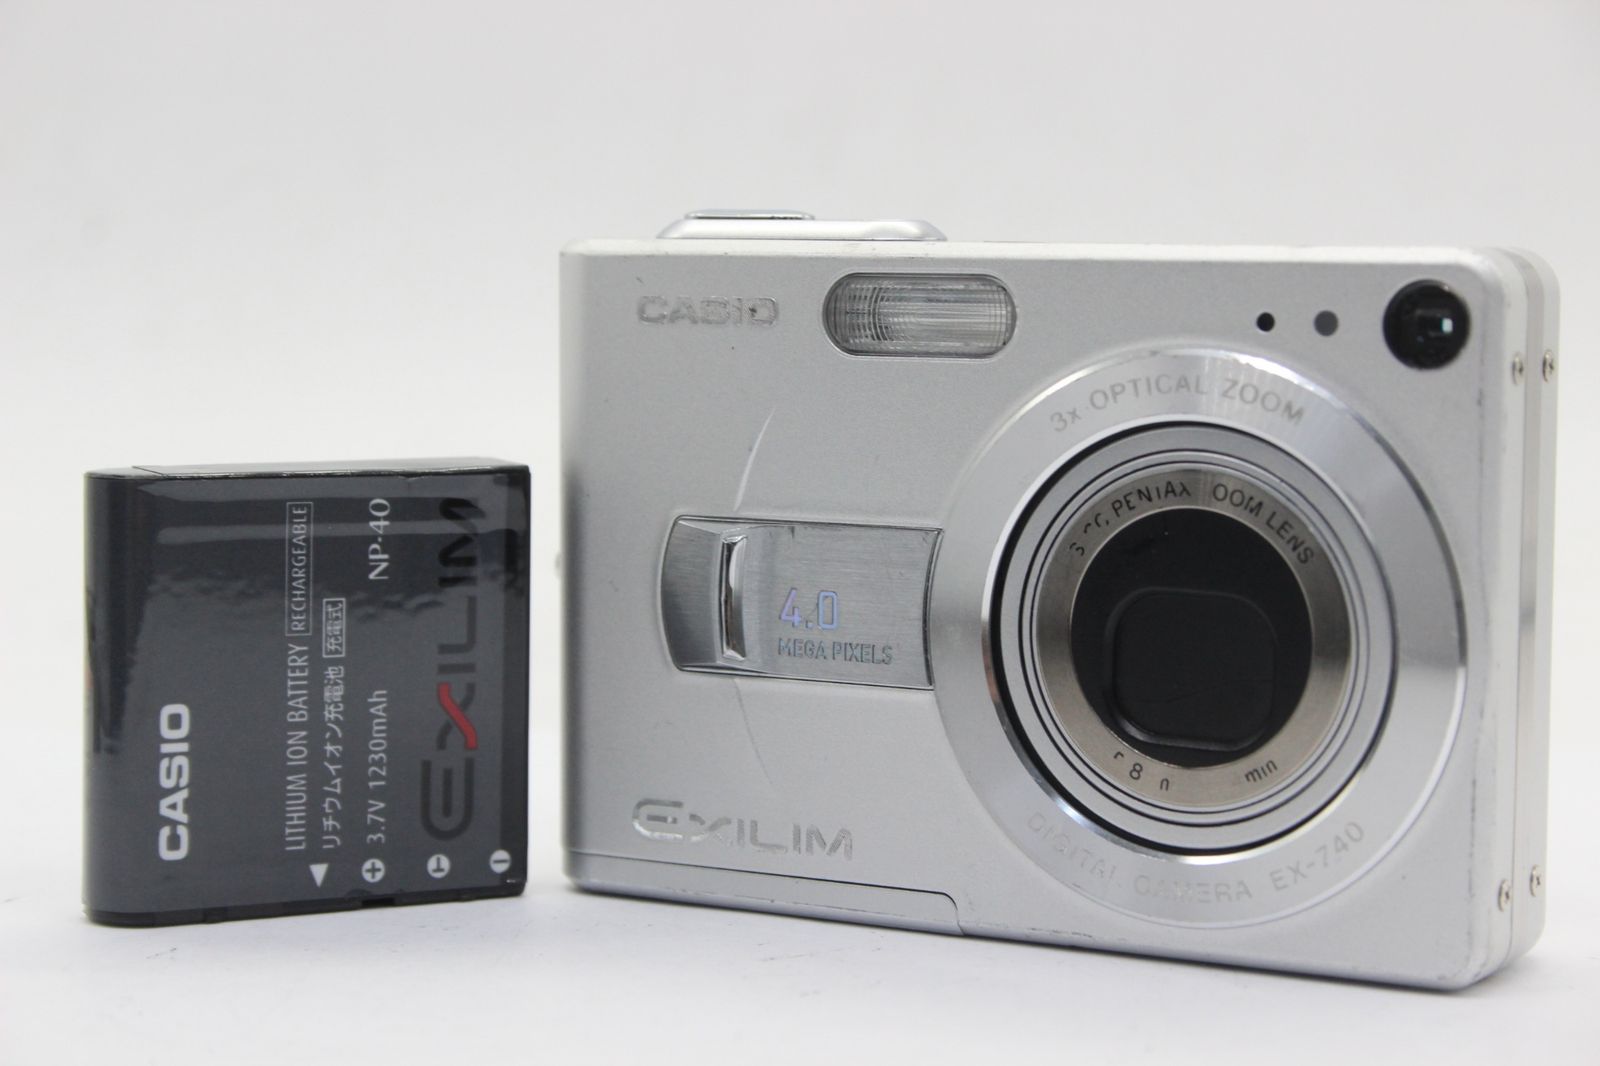 CASIO 【返品保証】 カシオ Casio Exilim EX-Z40 3x バッテリー付き コンパクトデジタルカメラ s8876